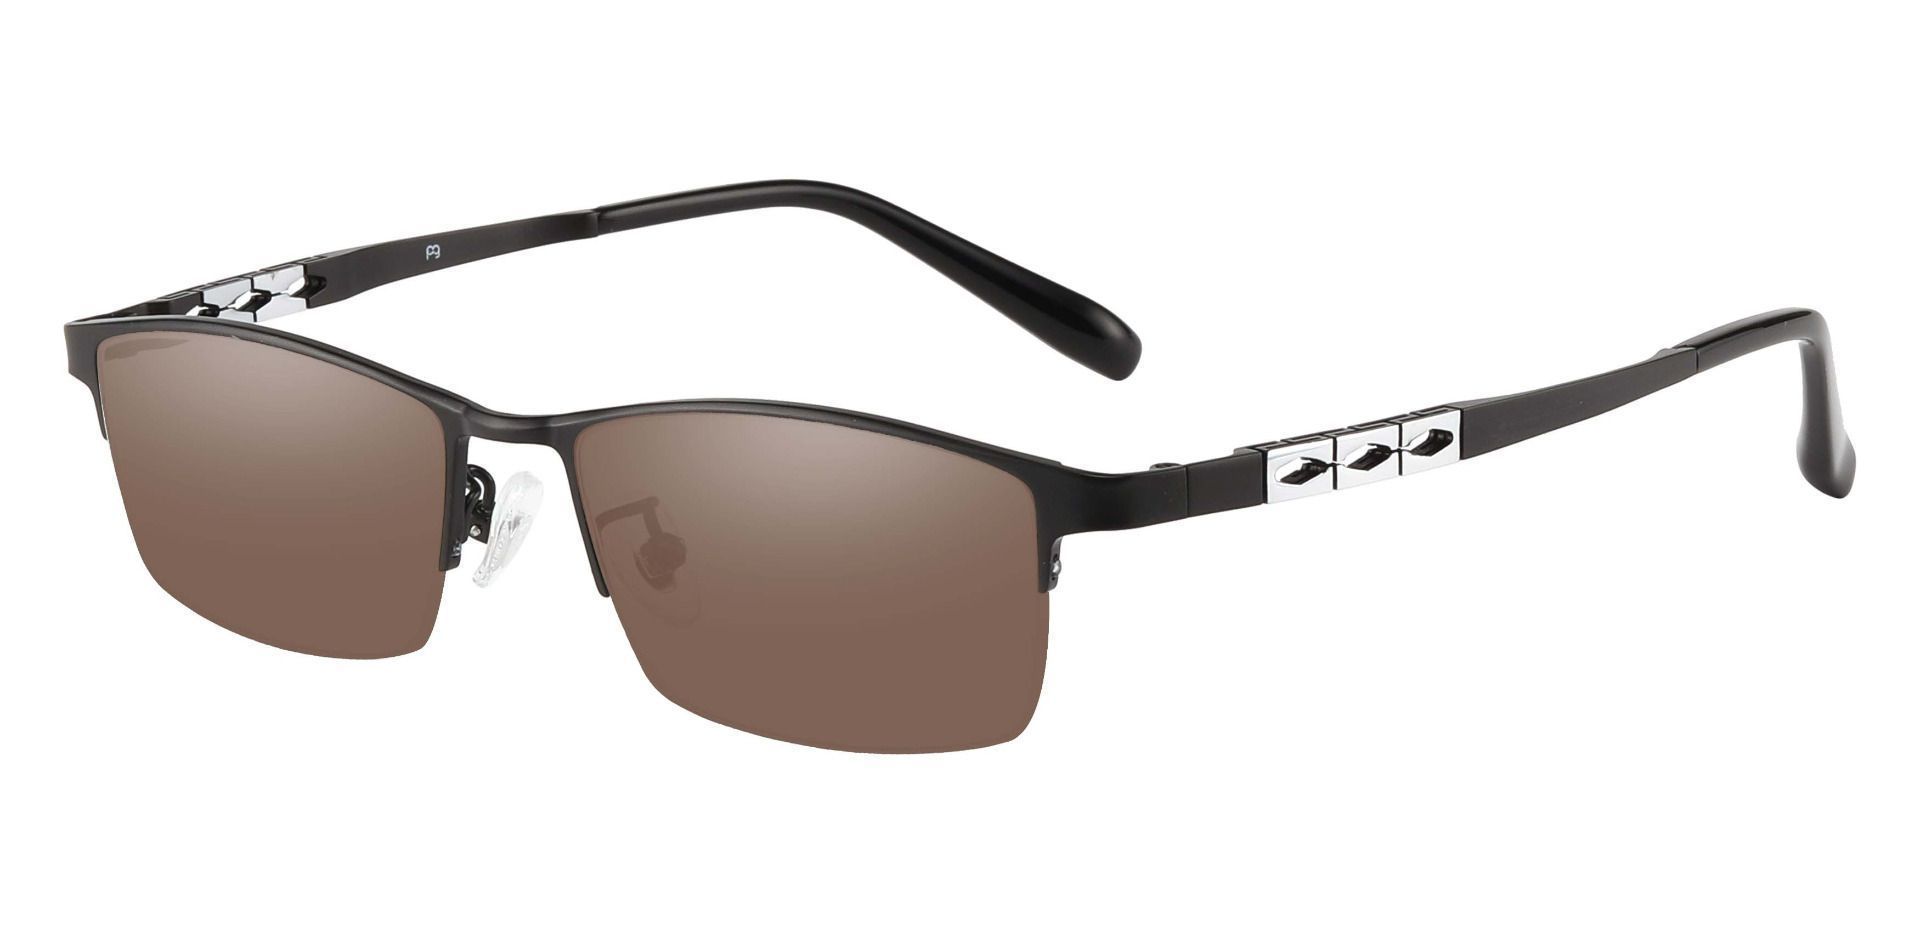 Burlington Rectangle Prescription Sunglasses - Black Frame With Brown Lenses